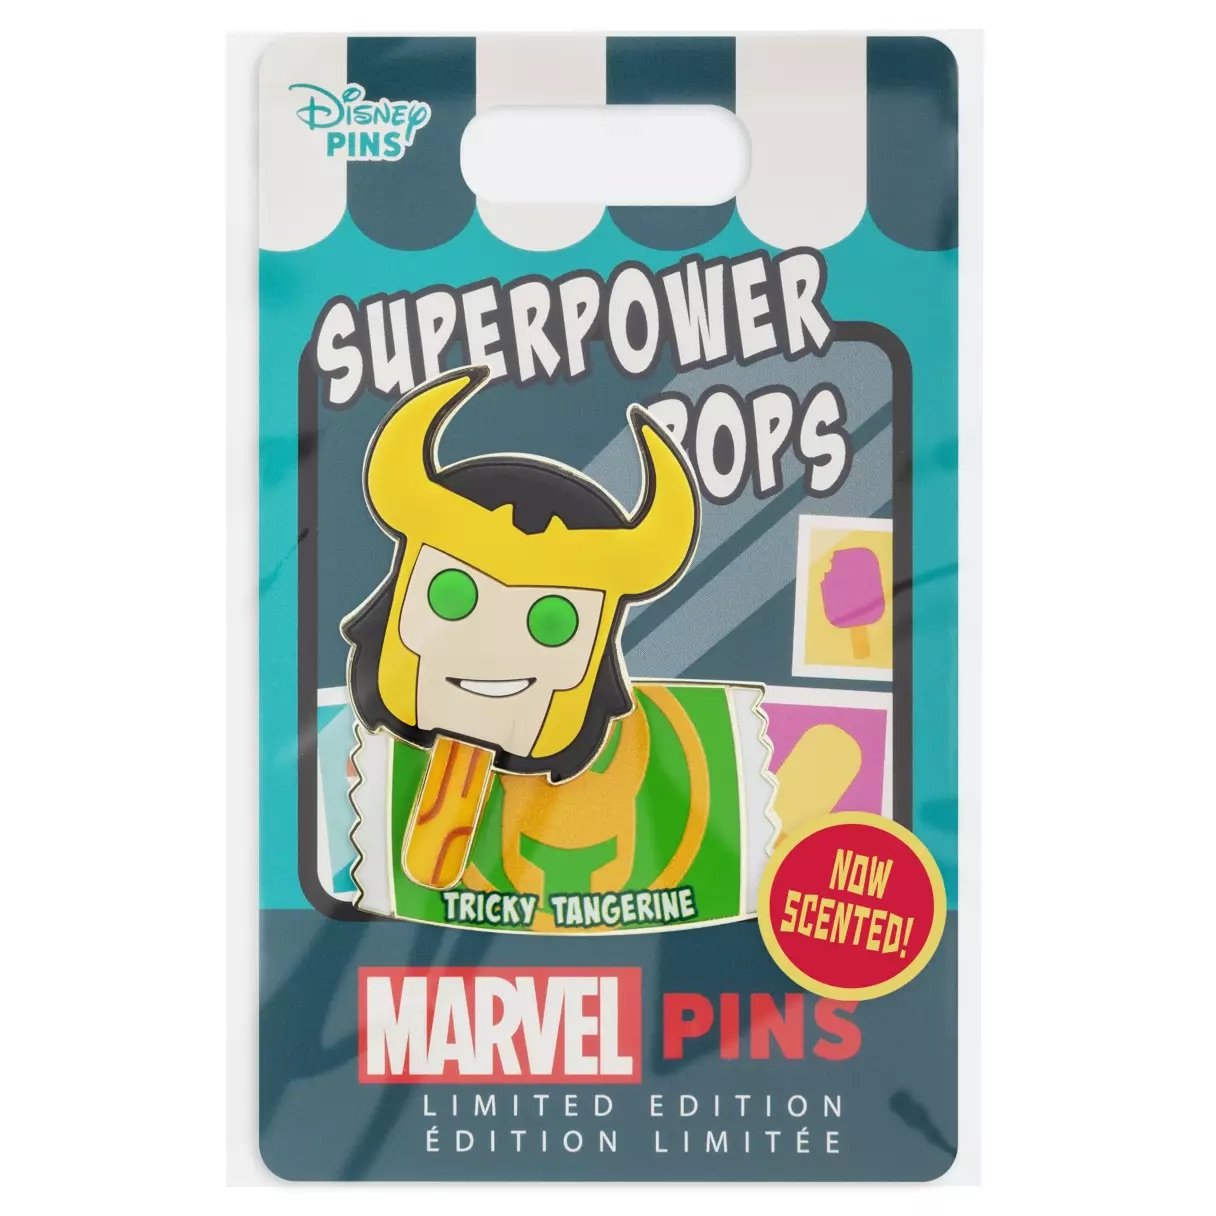 Loki Tricky Tangerine Superpower Pops Pin